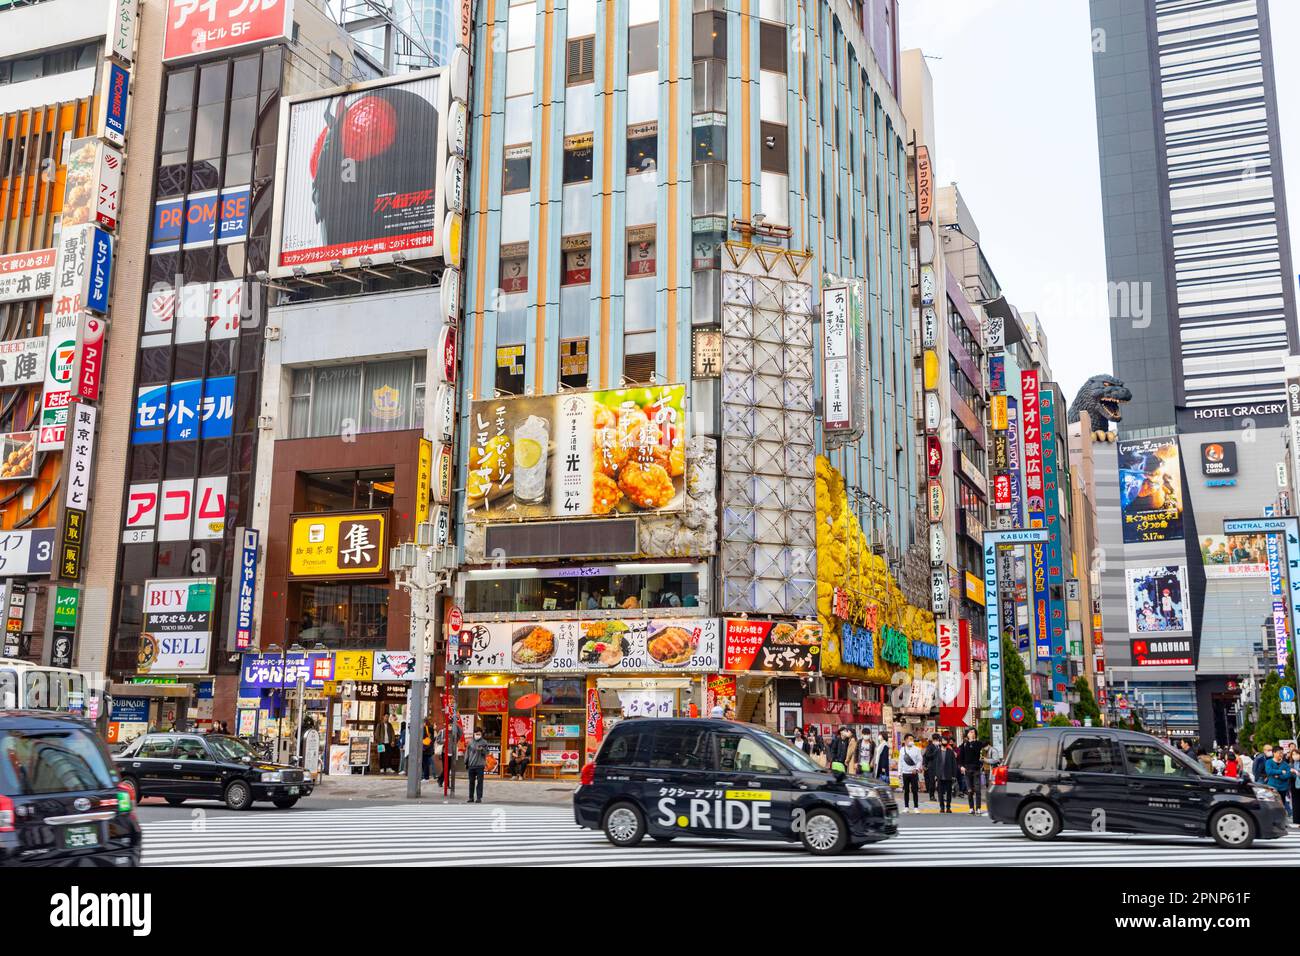 Shinjuku Tokyo 2023 aprile, hotel Gracery e statua Godzilla, luci al neon e segni, Shinjuku Tokyo, Giappone Foto Stock